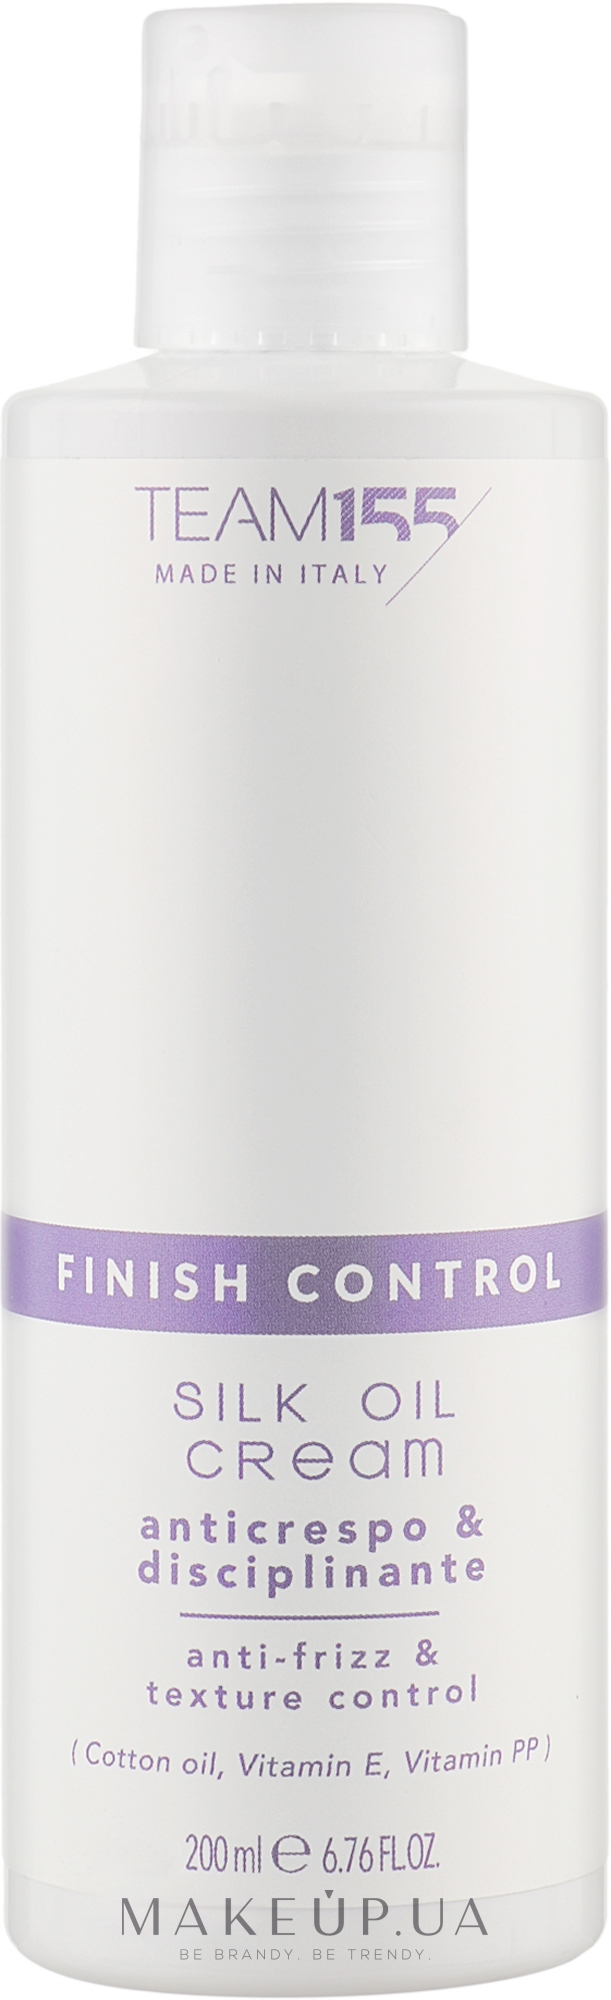 Крем-олія для волосся - Team 155 Finish Control Silk Oil Cream — фото 200ml